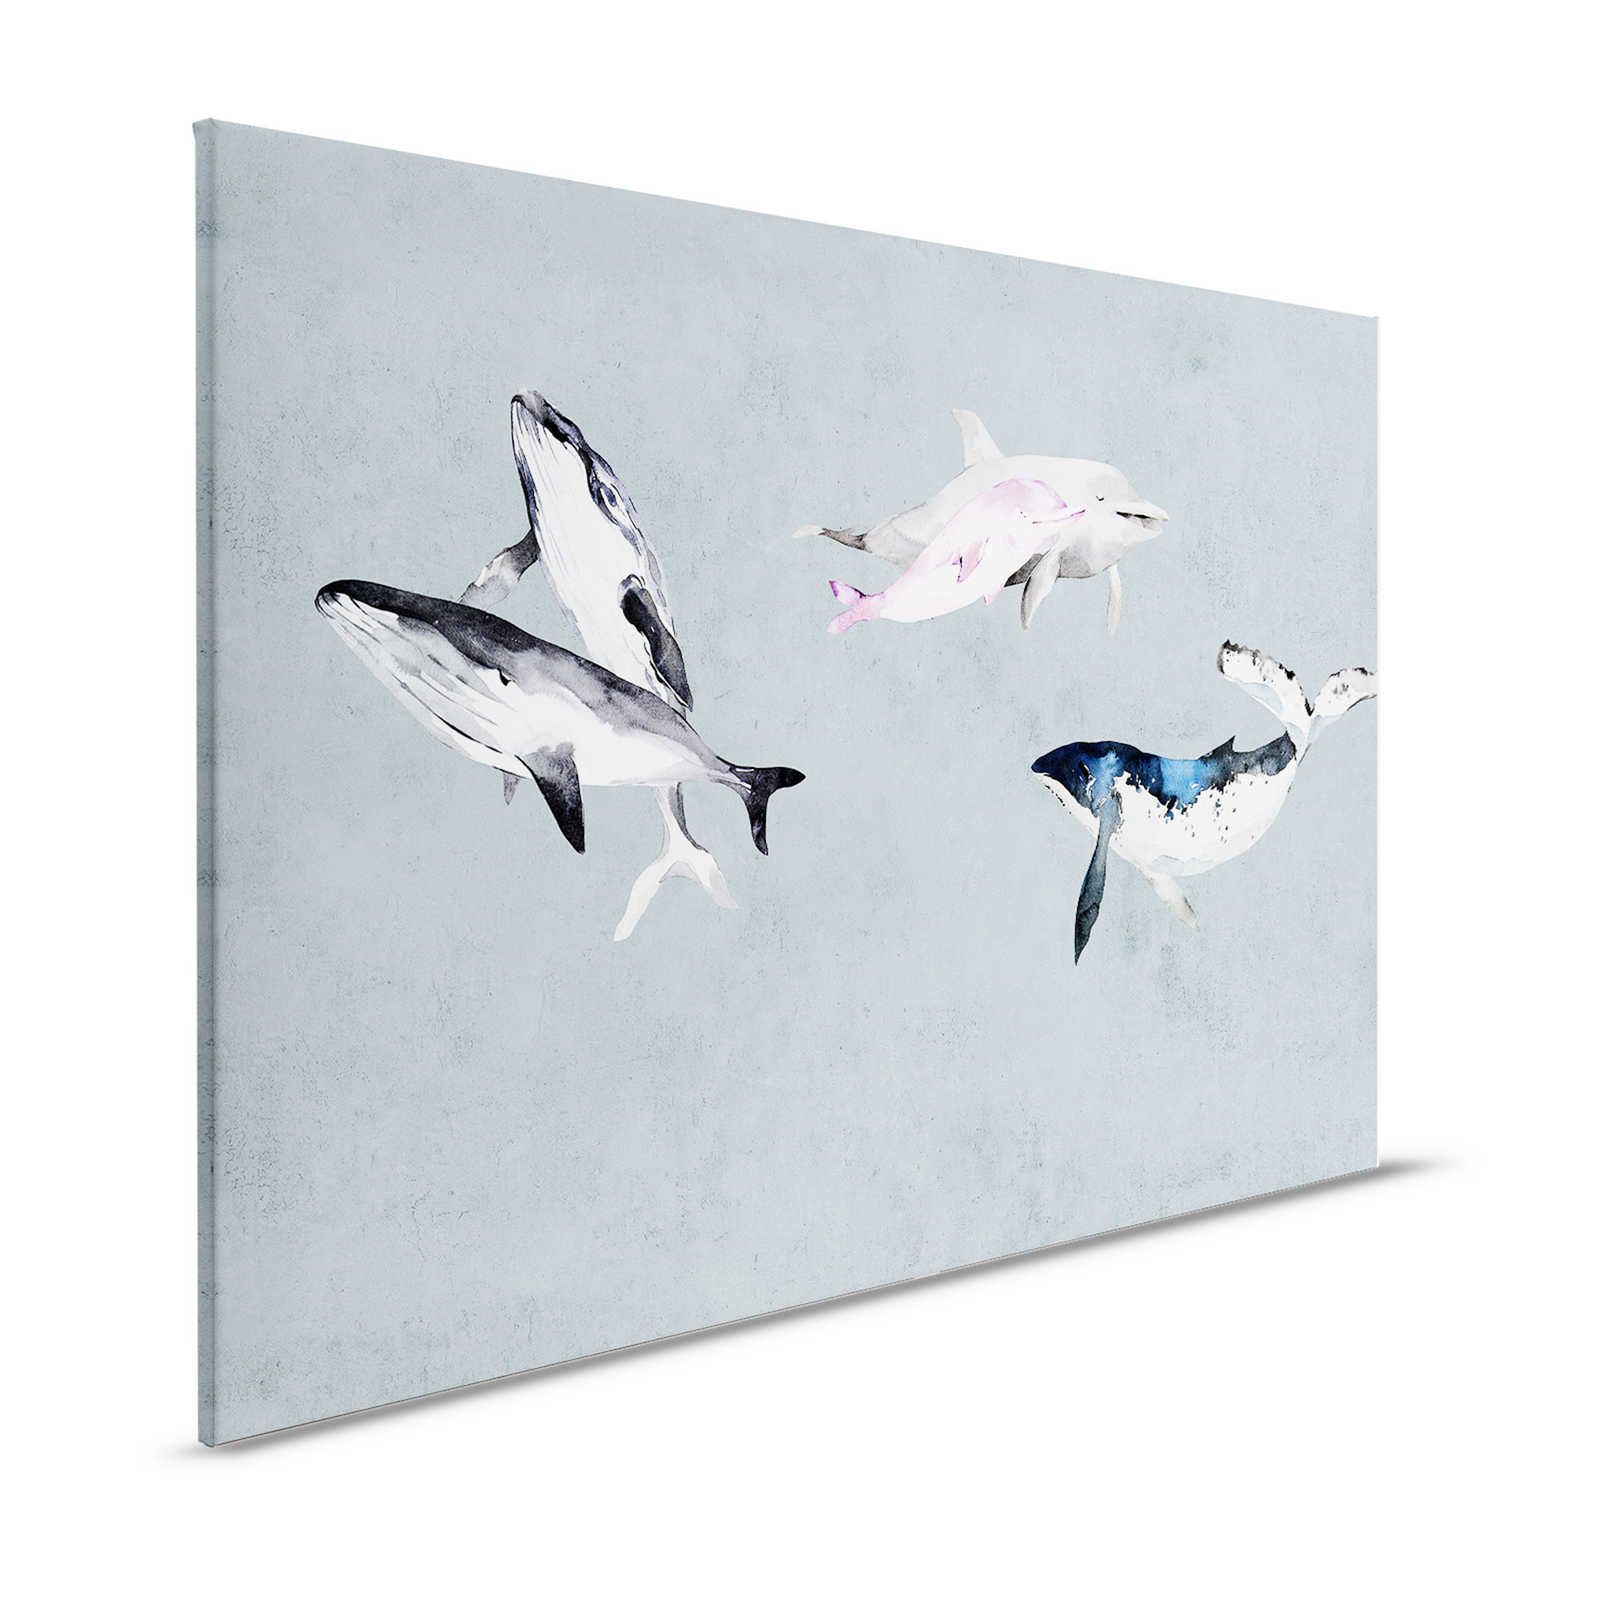 Oceans Five 1 - Leinwandbild Wale & Delfine im Aquarell Stil – 1,20 m x 0,80 m
